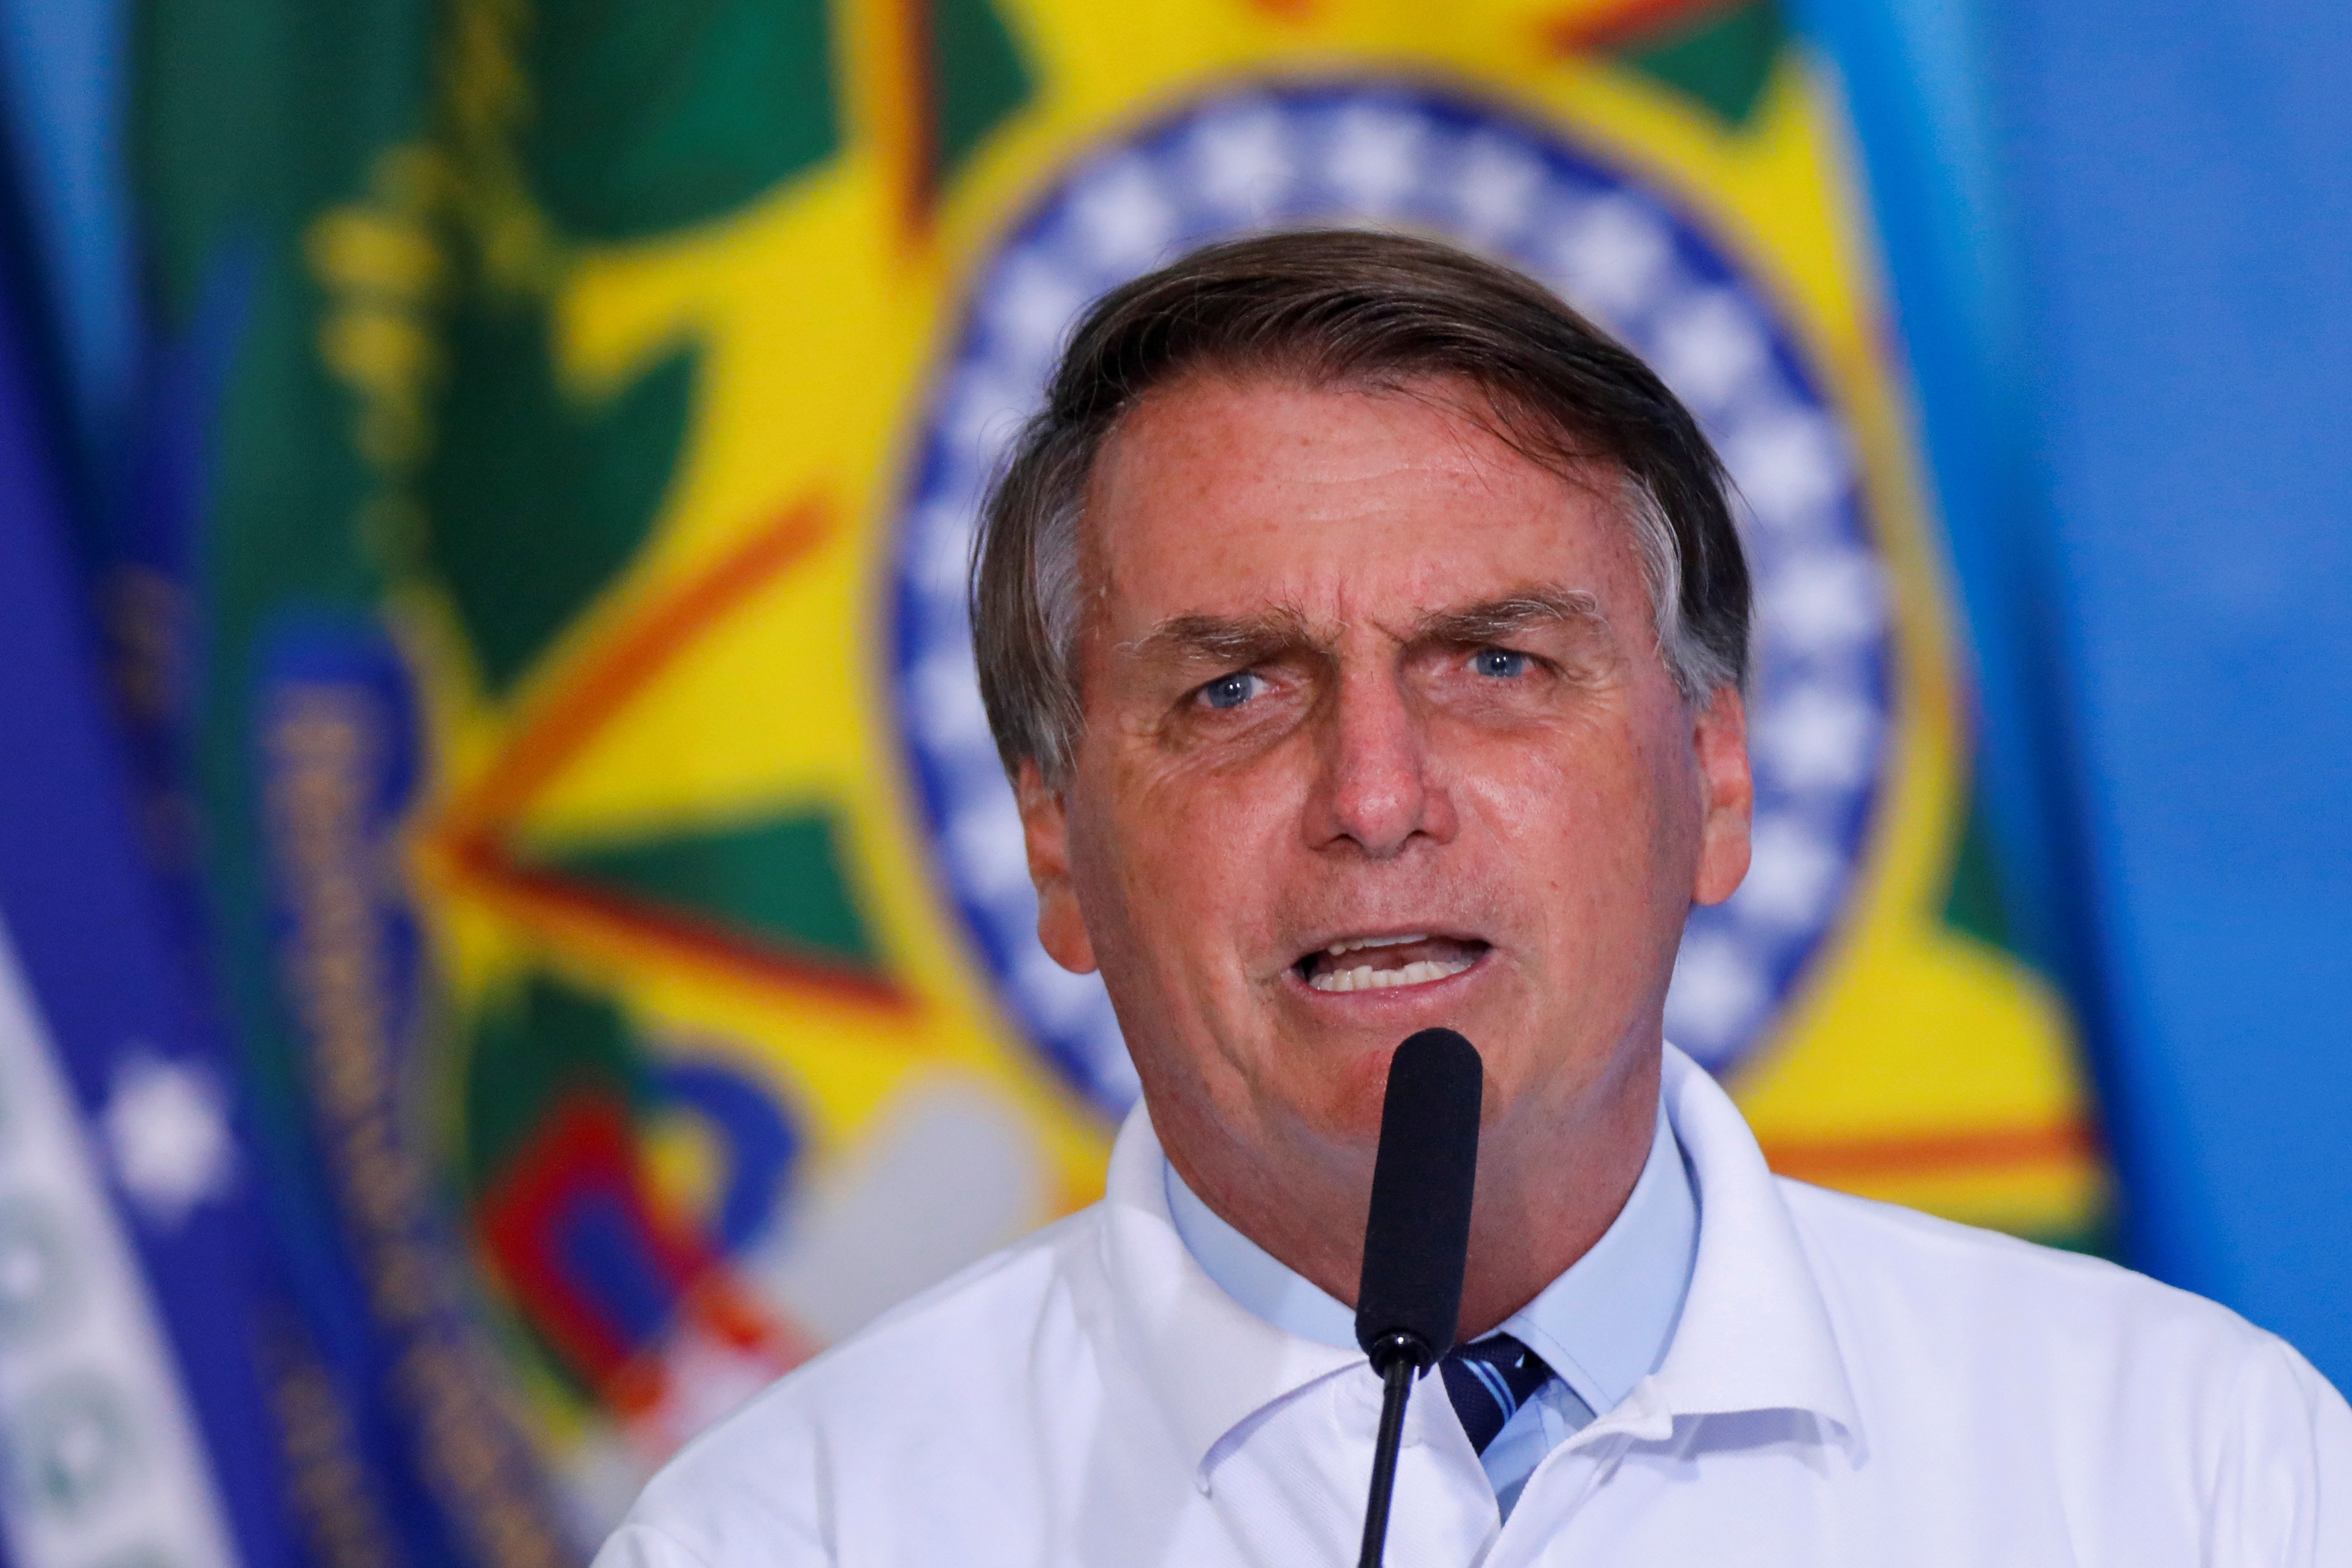 Presidente Jair Bolsonaro durante cerimônia no Palácio do Planalto 12/01/2021 (Foto: Adriano Machado/Reuters)